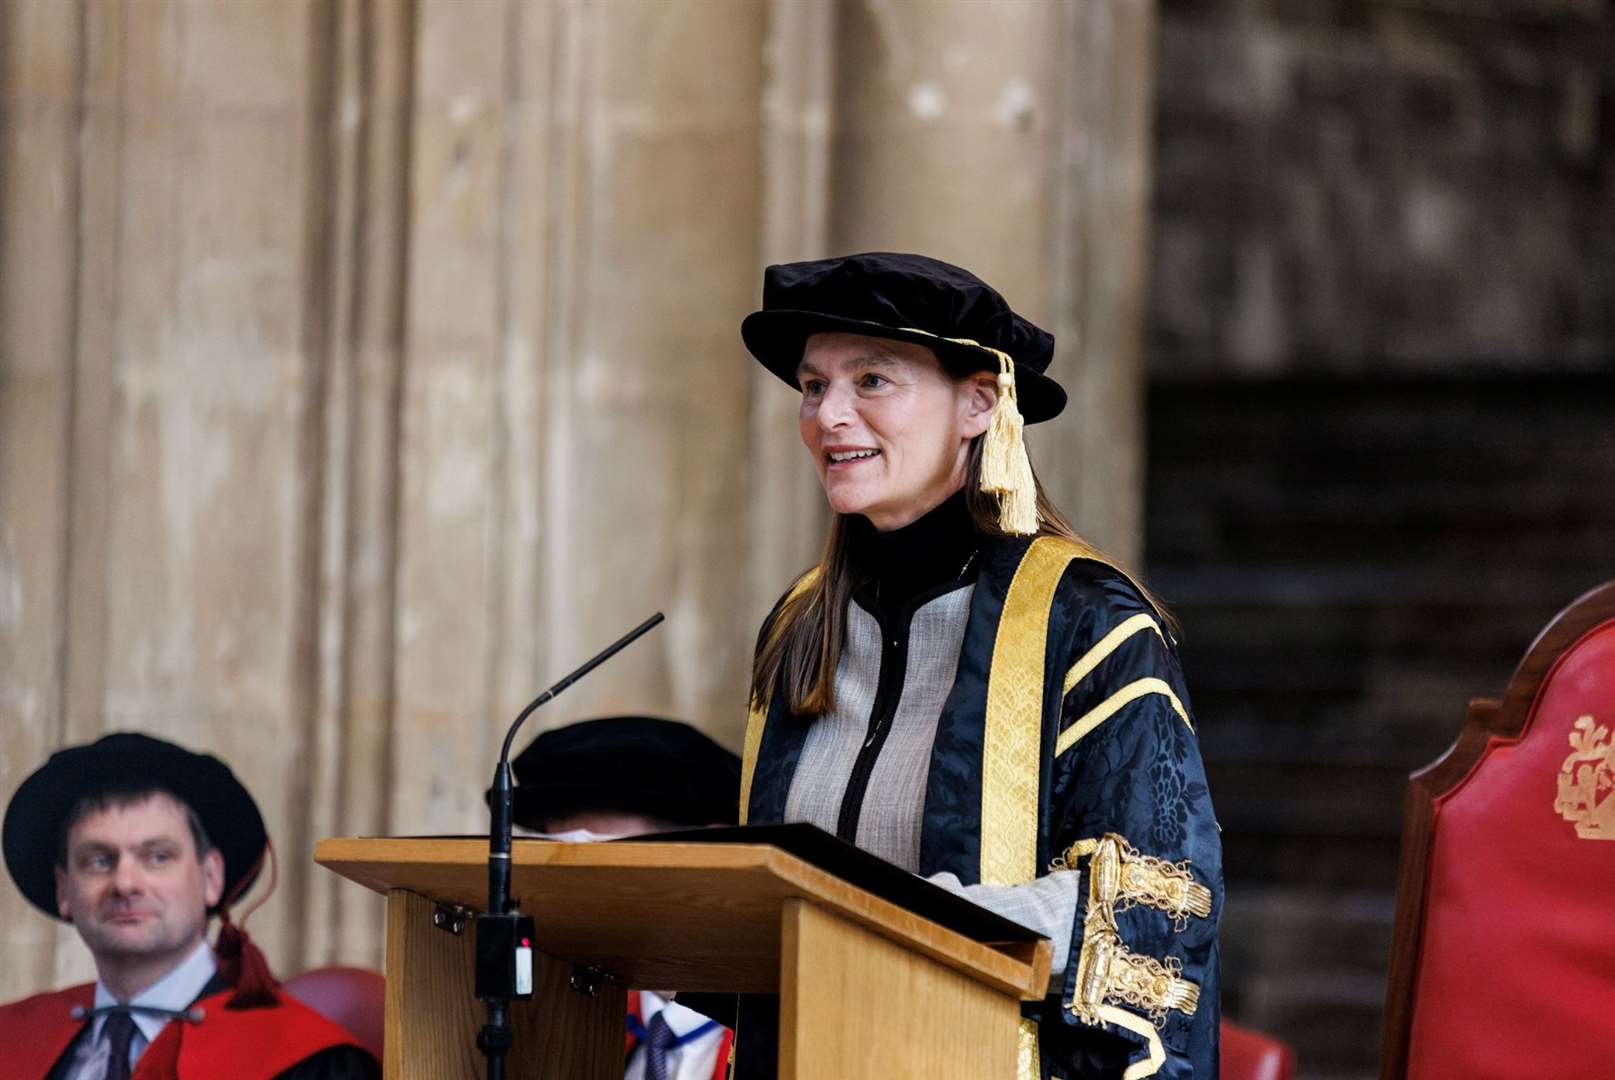 University of Kent vice-chancellor Professor Karen Cox has resigned